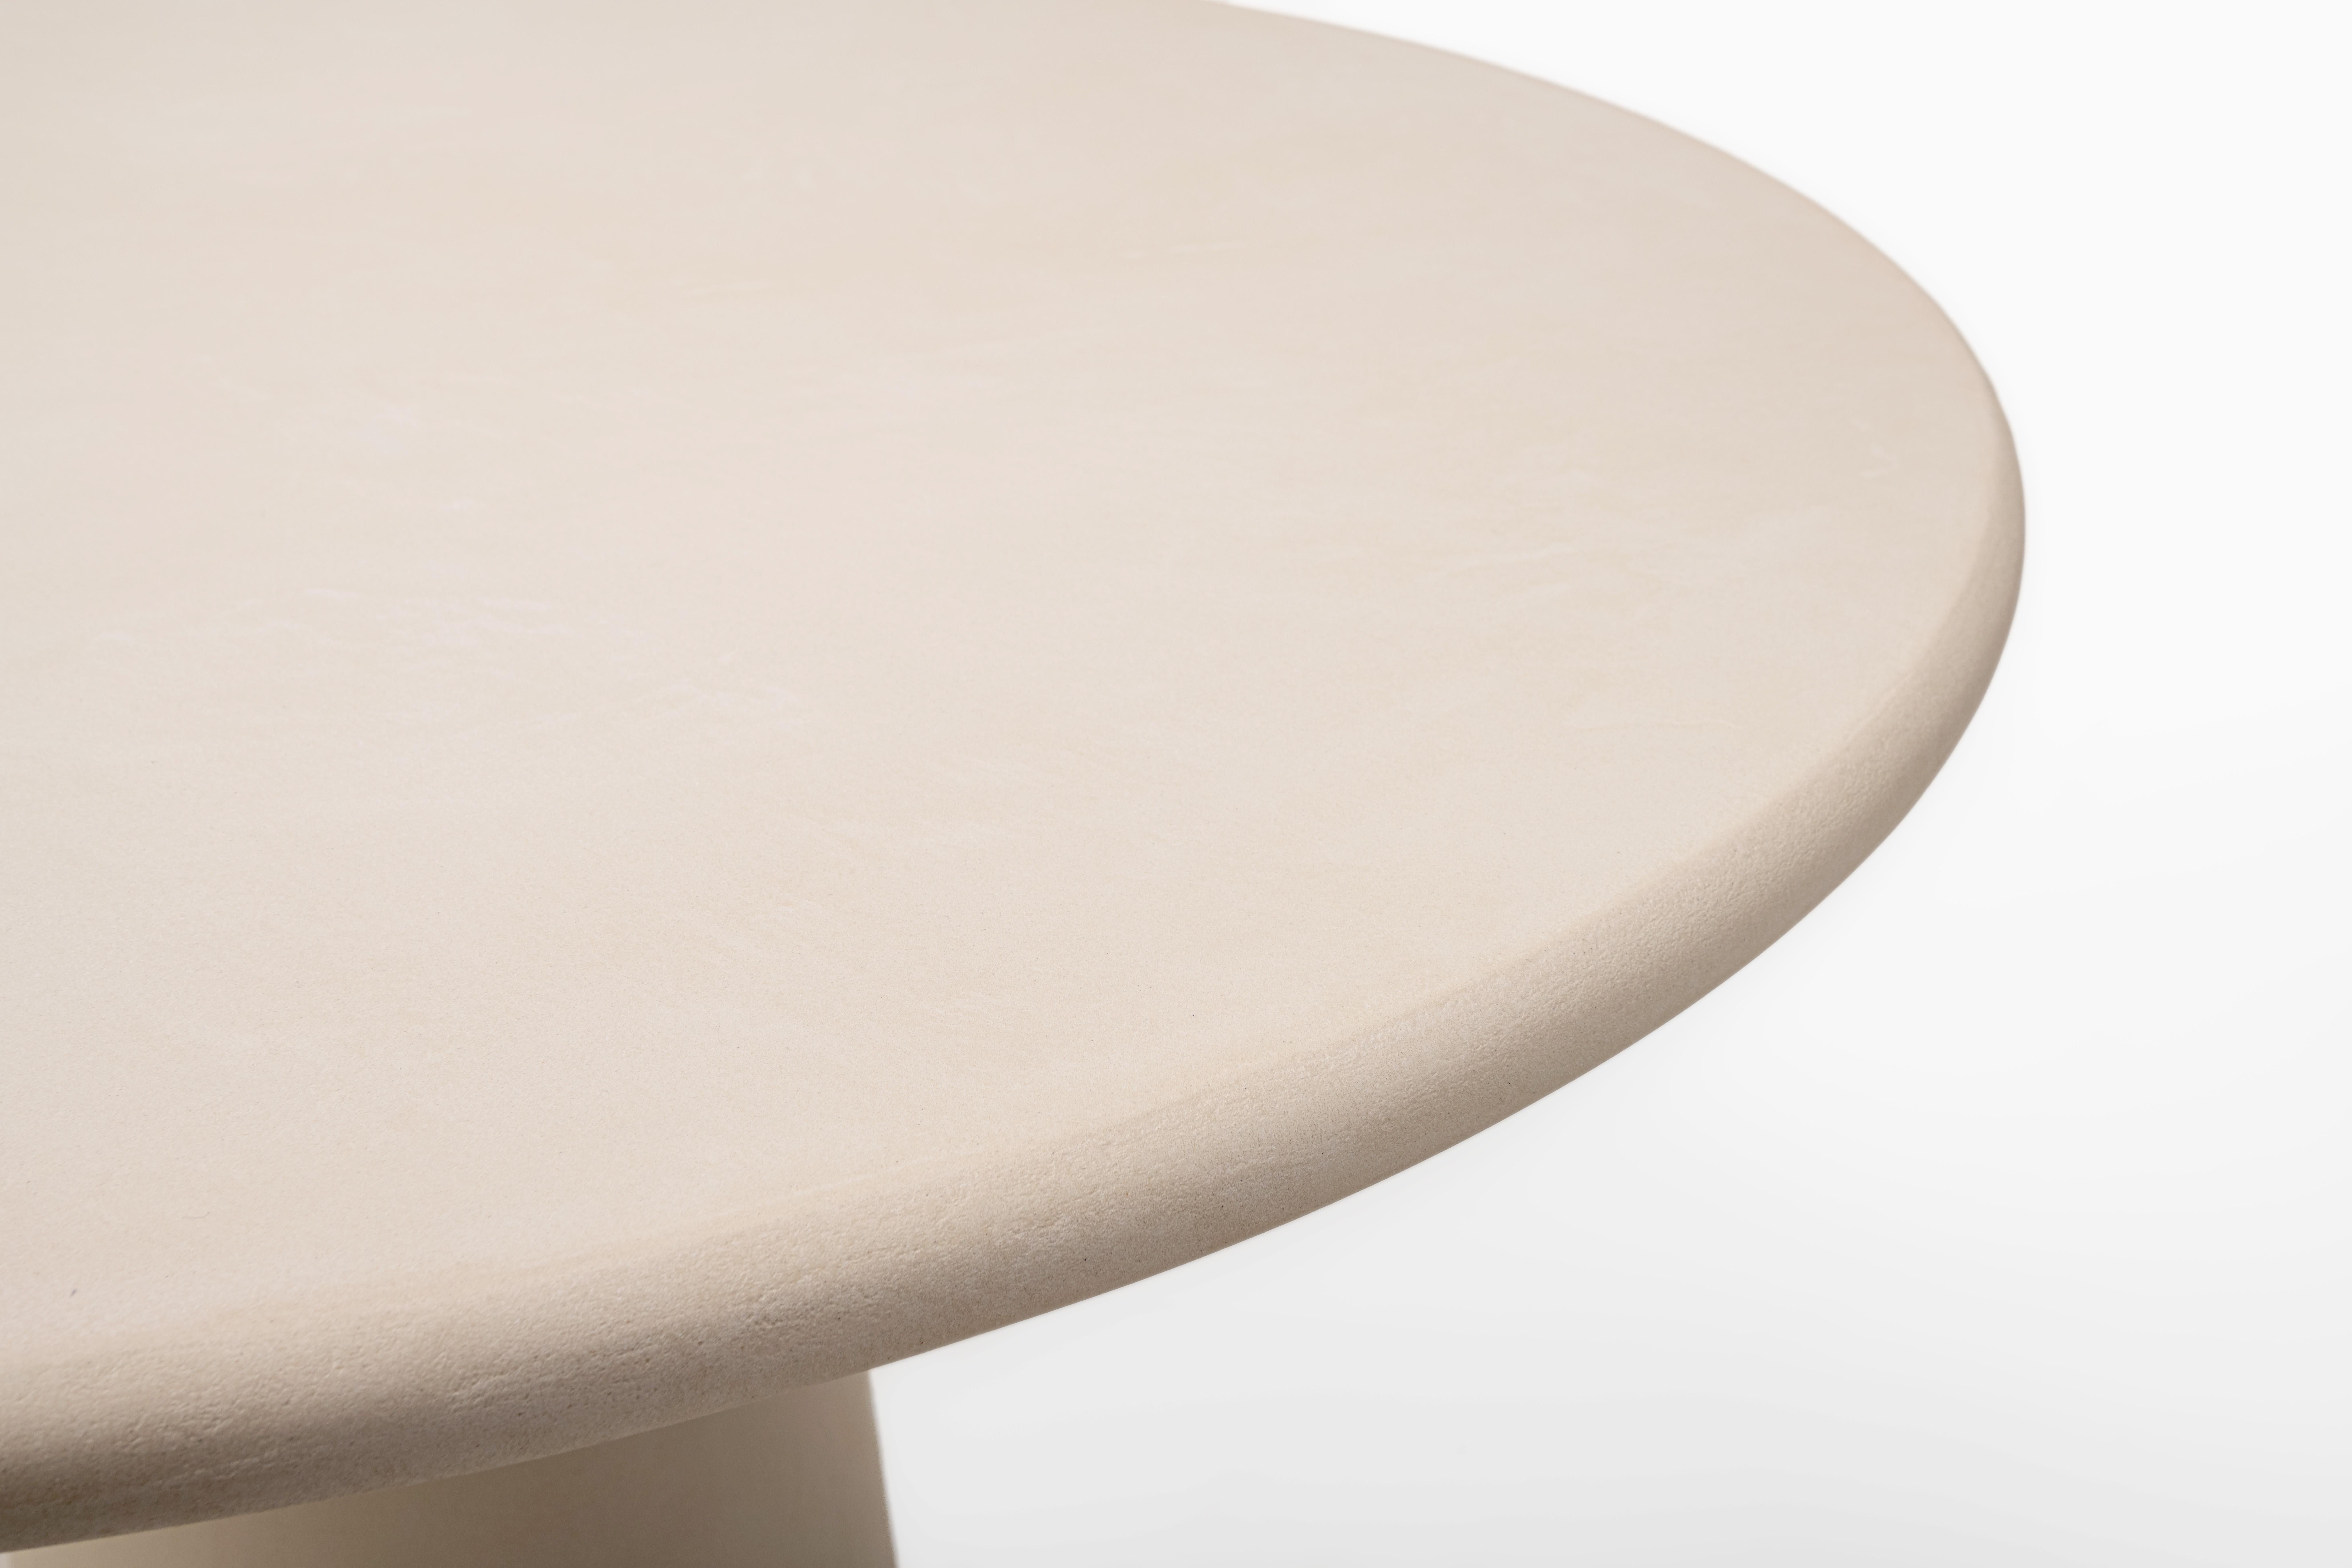 Minimalist Round Natural Plaster Dining Table 